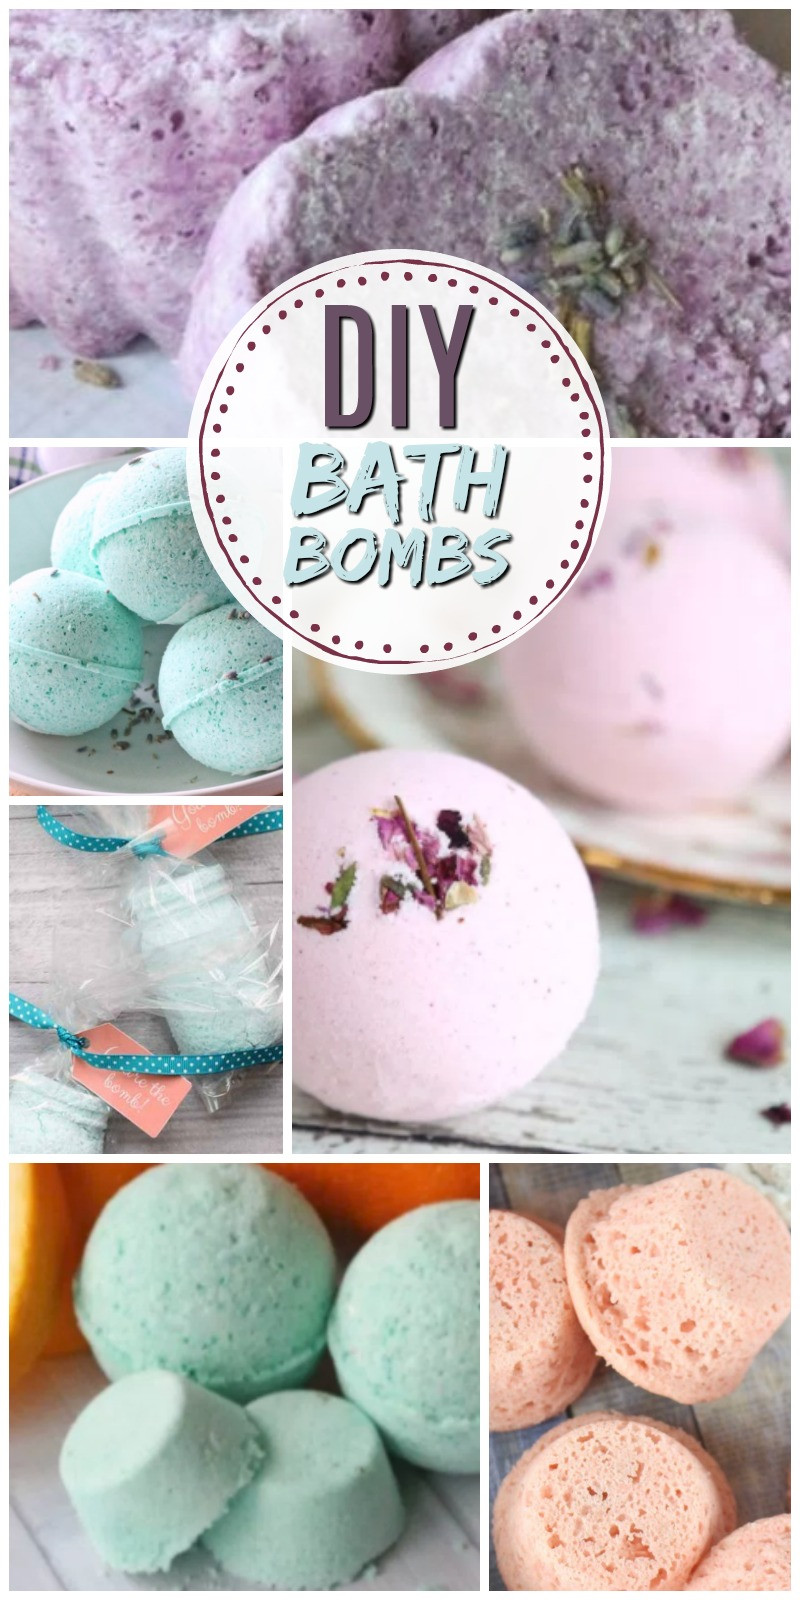 DIY Bath Bombs For Kids
 The Best Bath Bombs 17 DIY Bath Bombs You Can Make